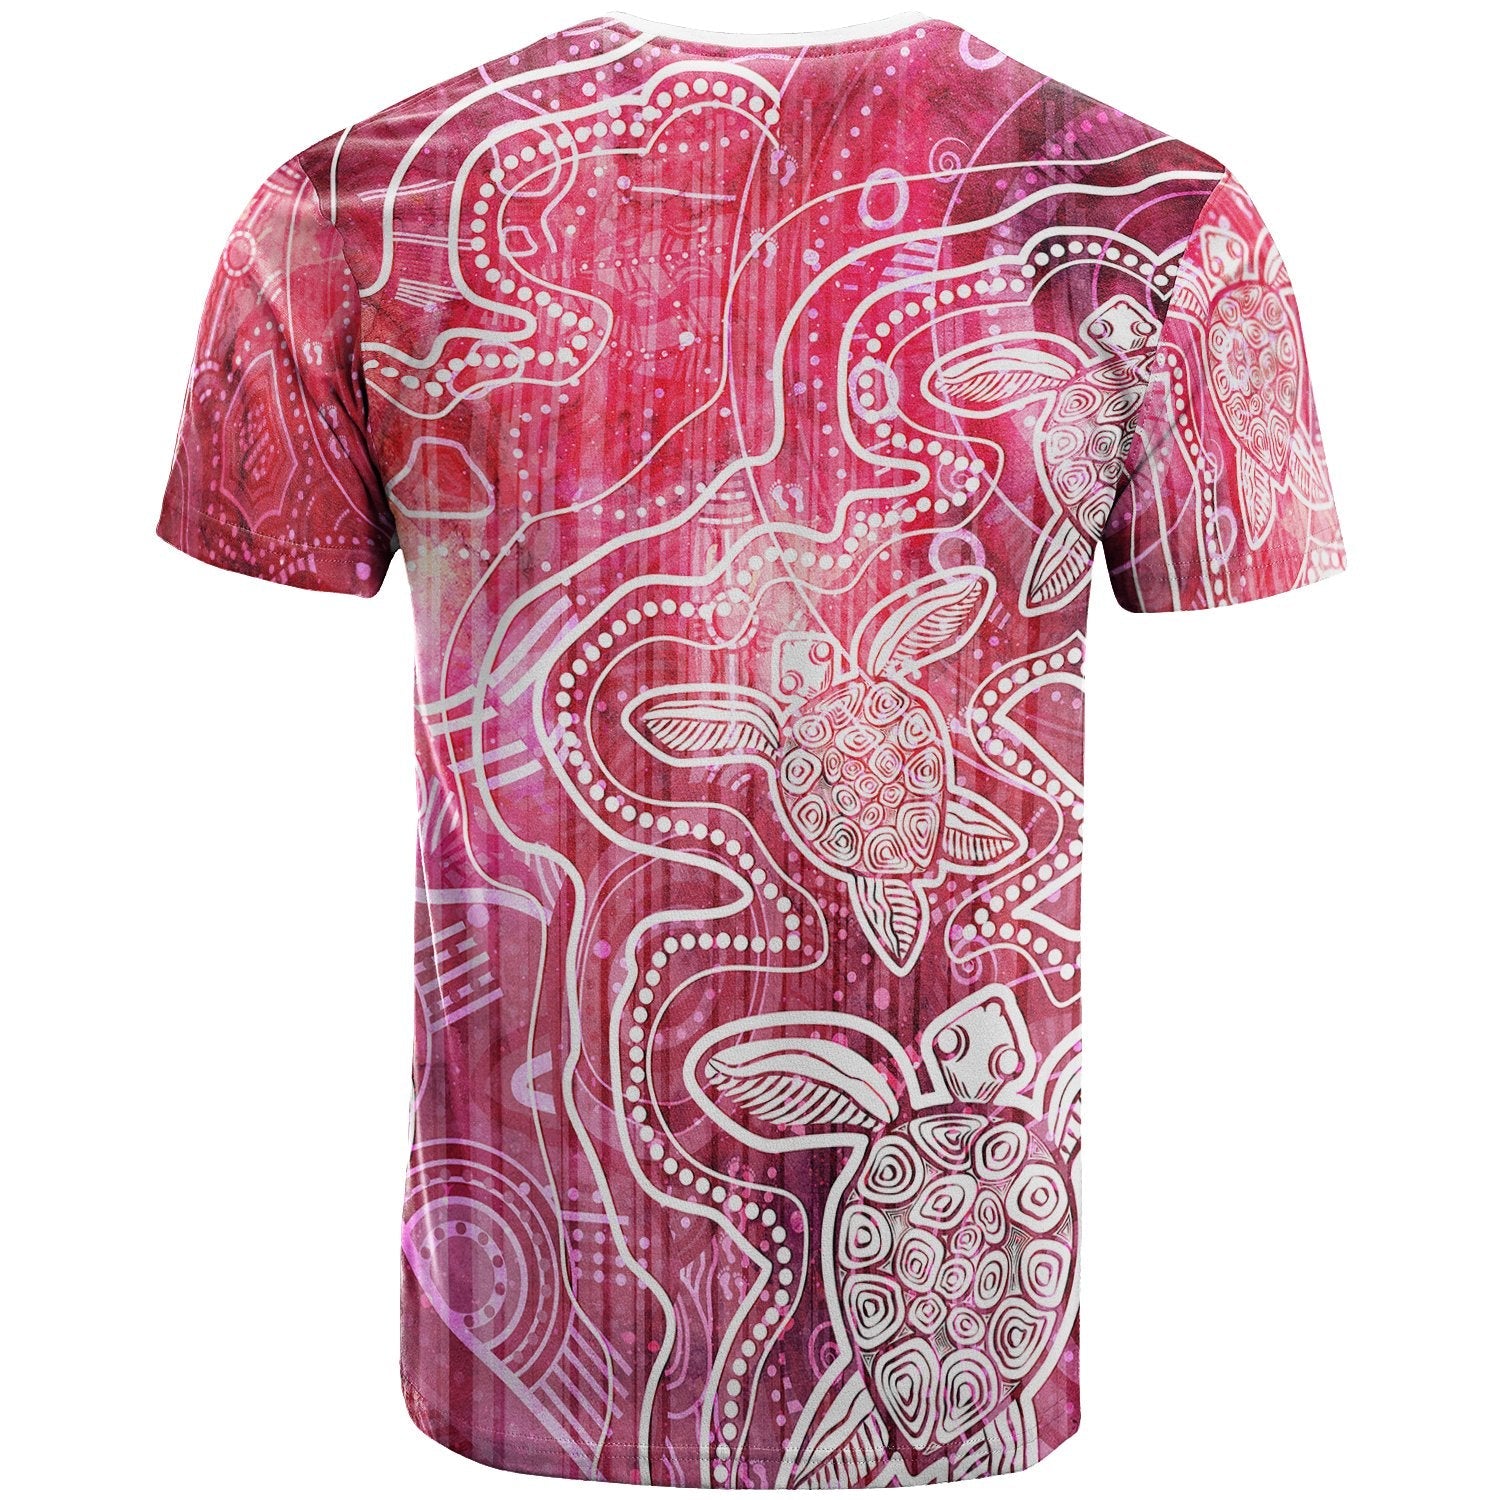 aboriginal-t-shirt-sea-turtle-with-indigenous-patterns-pink